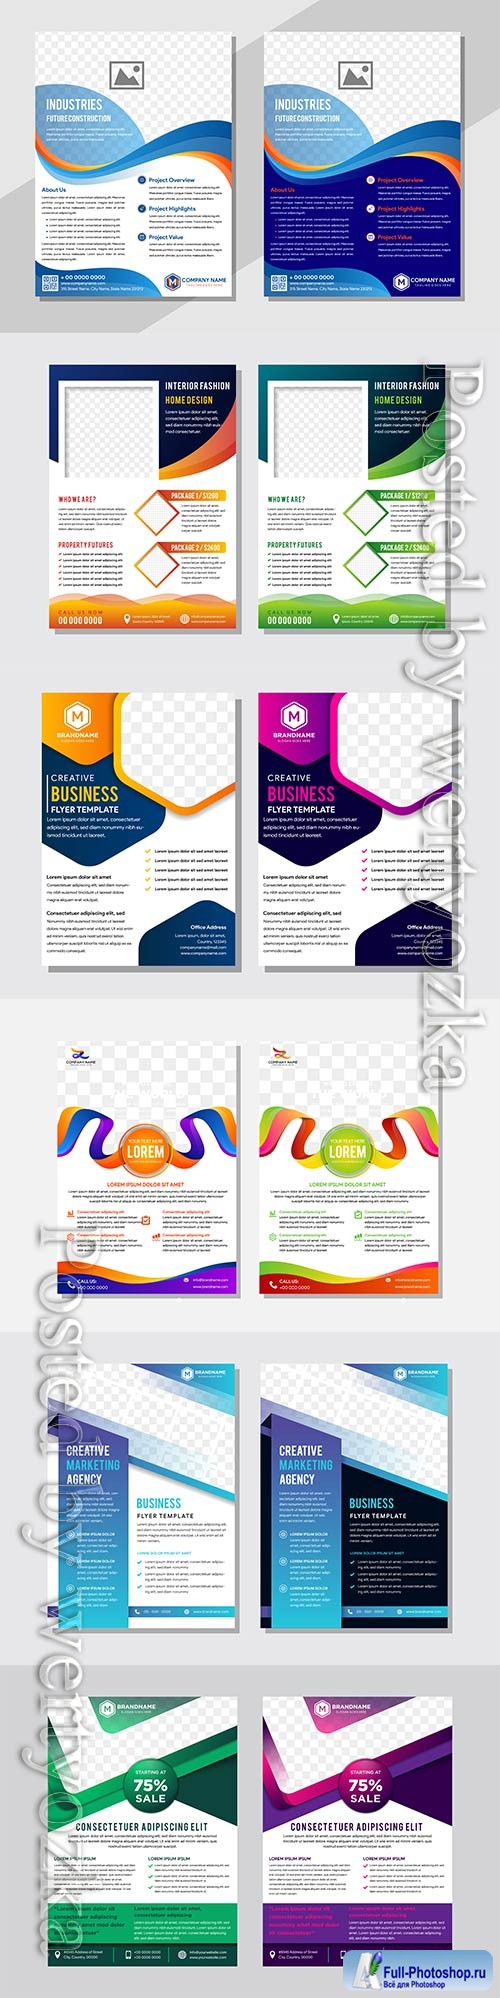 Business vector design template for brochure, flyer